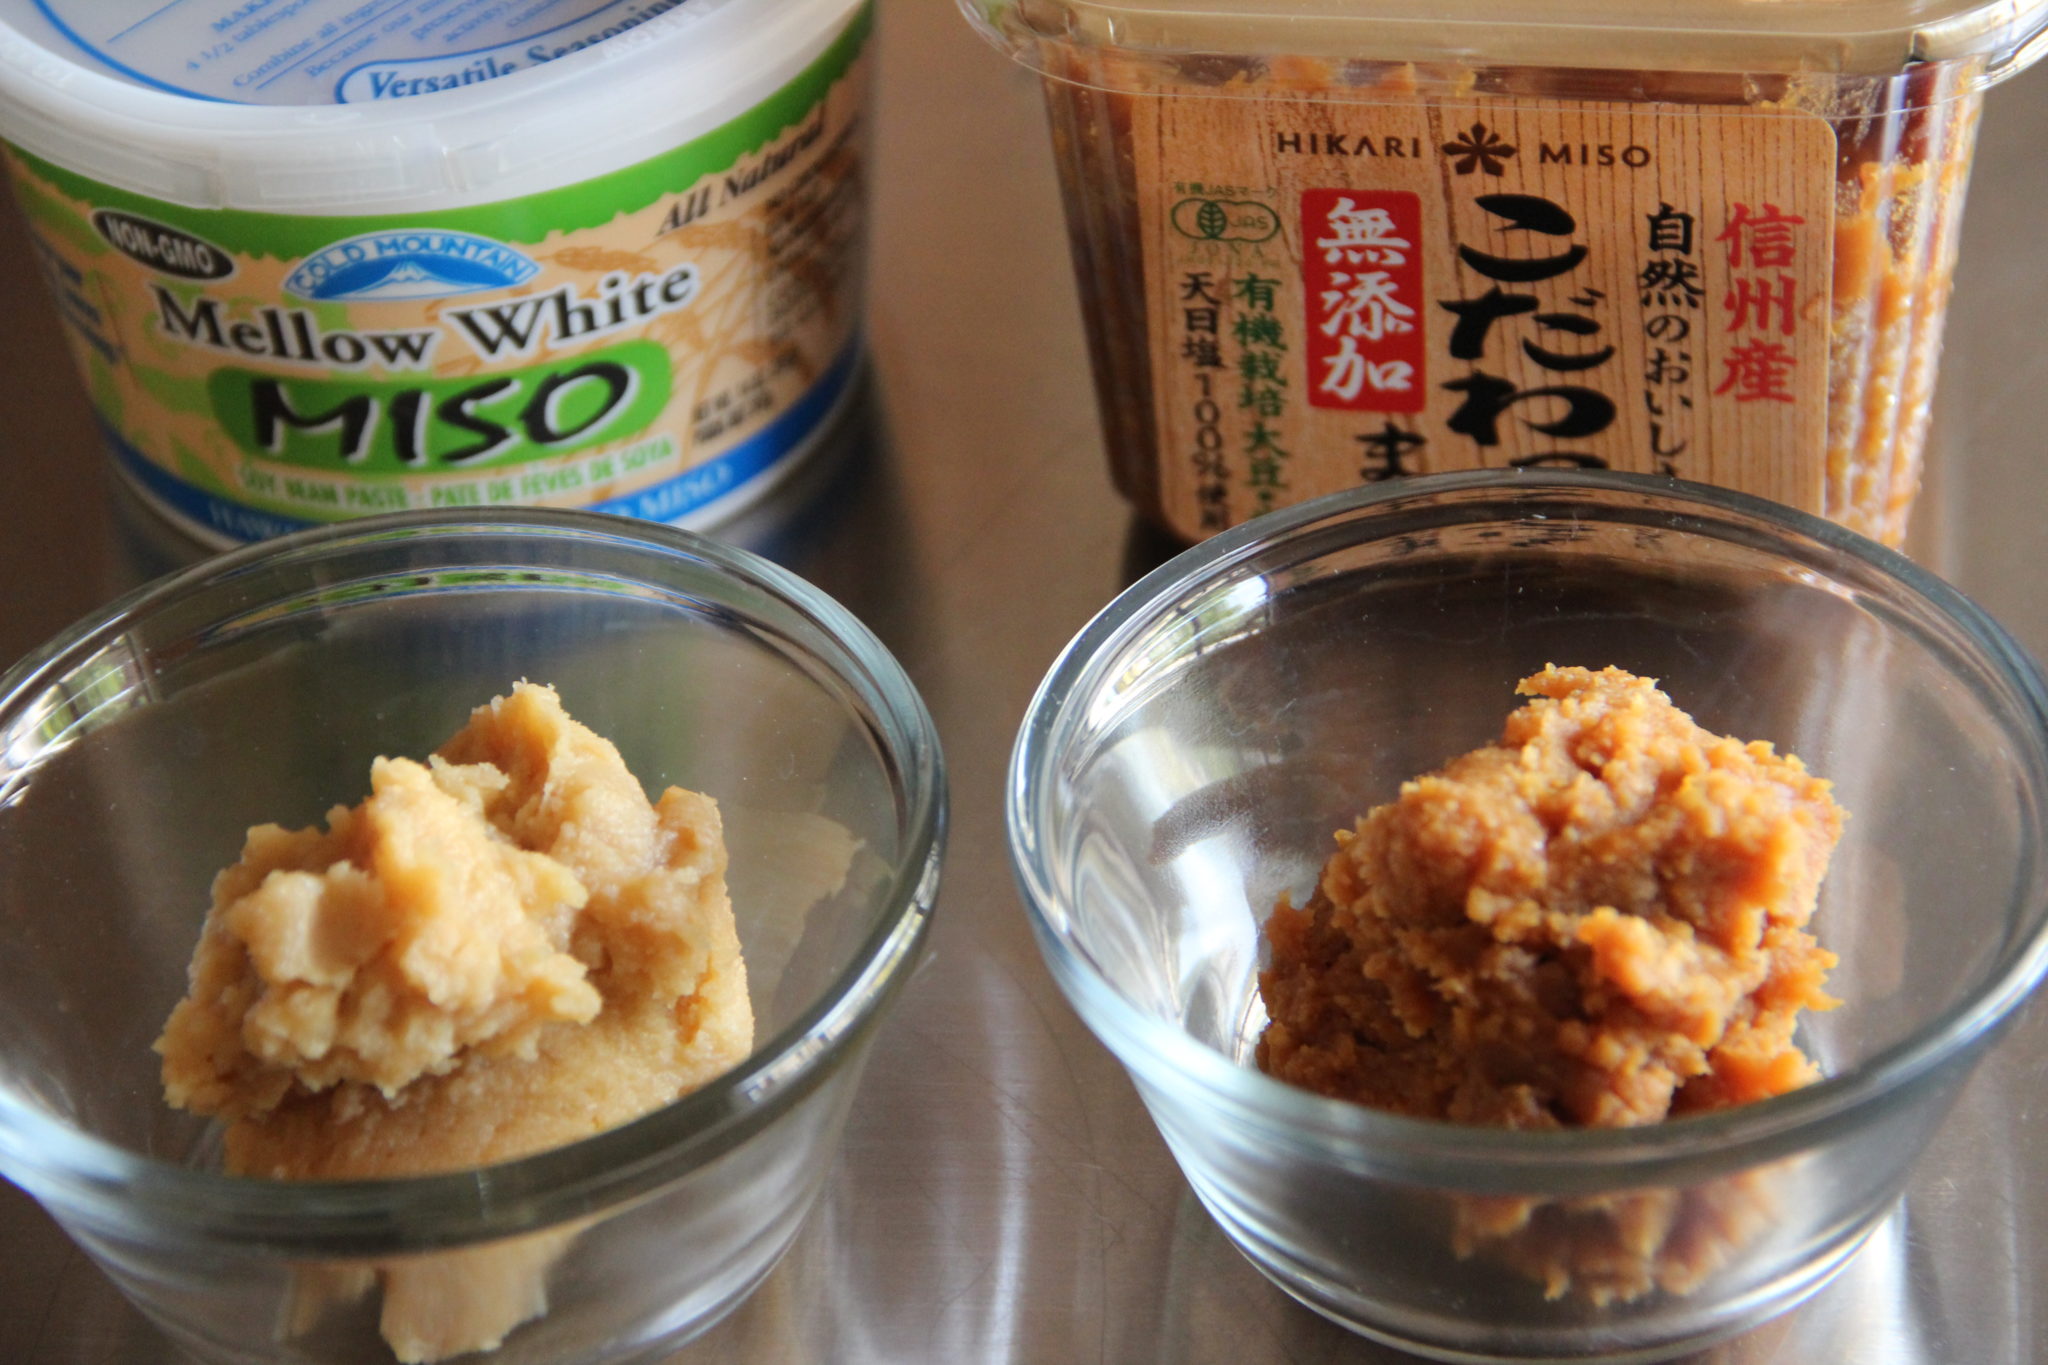 white miso paste nutrition